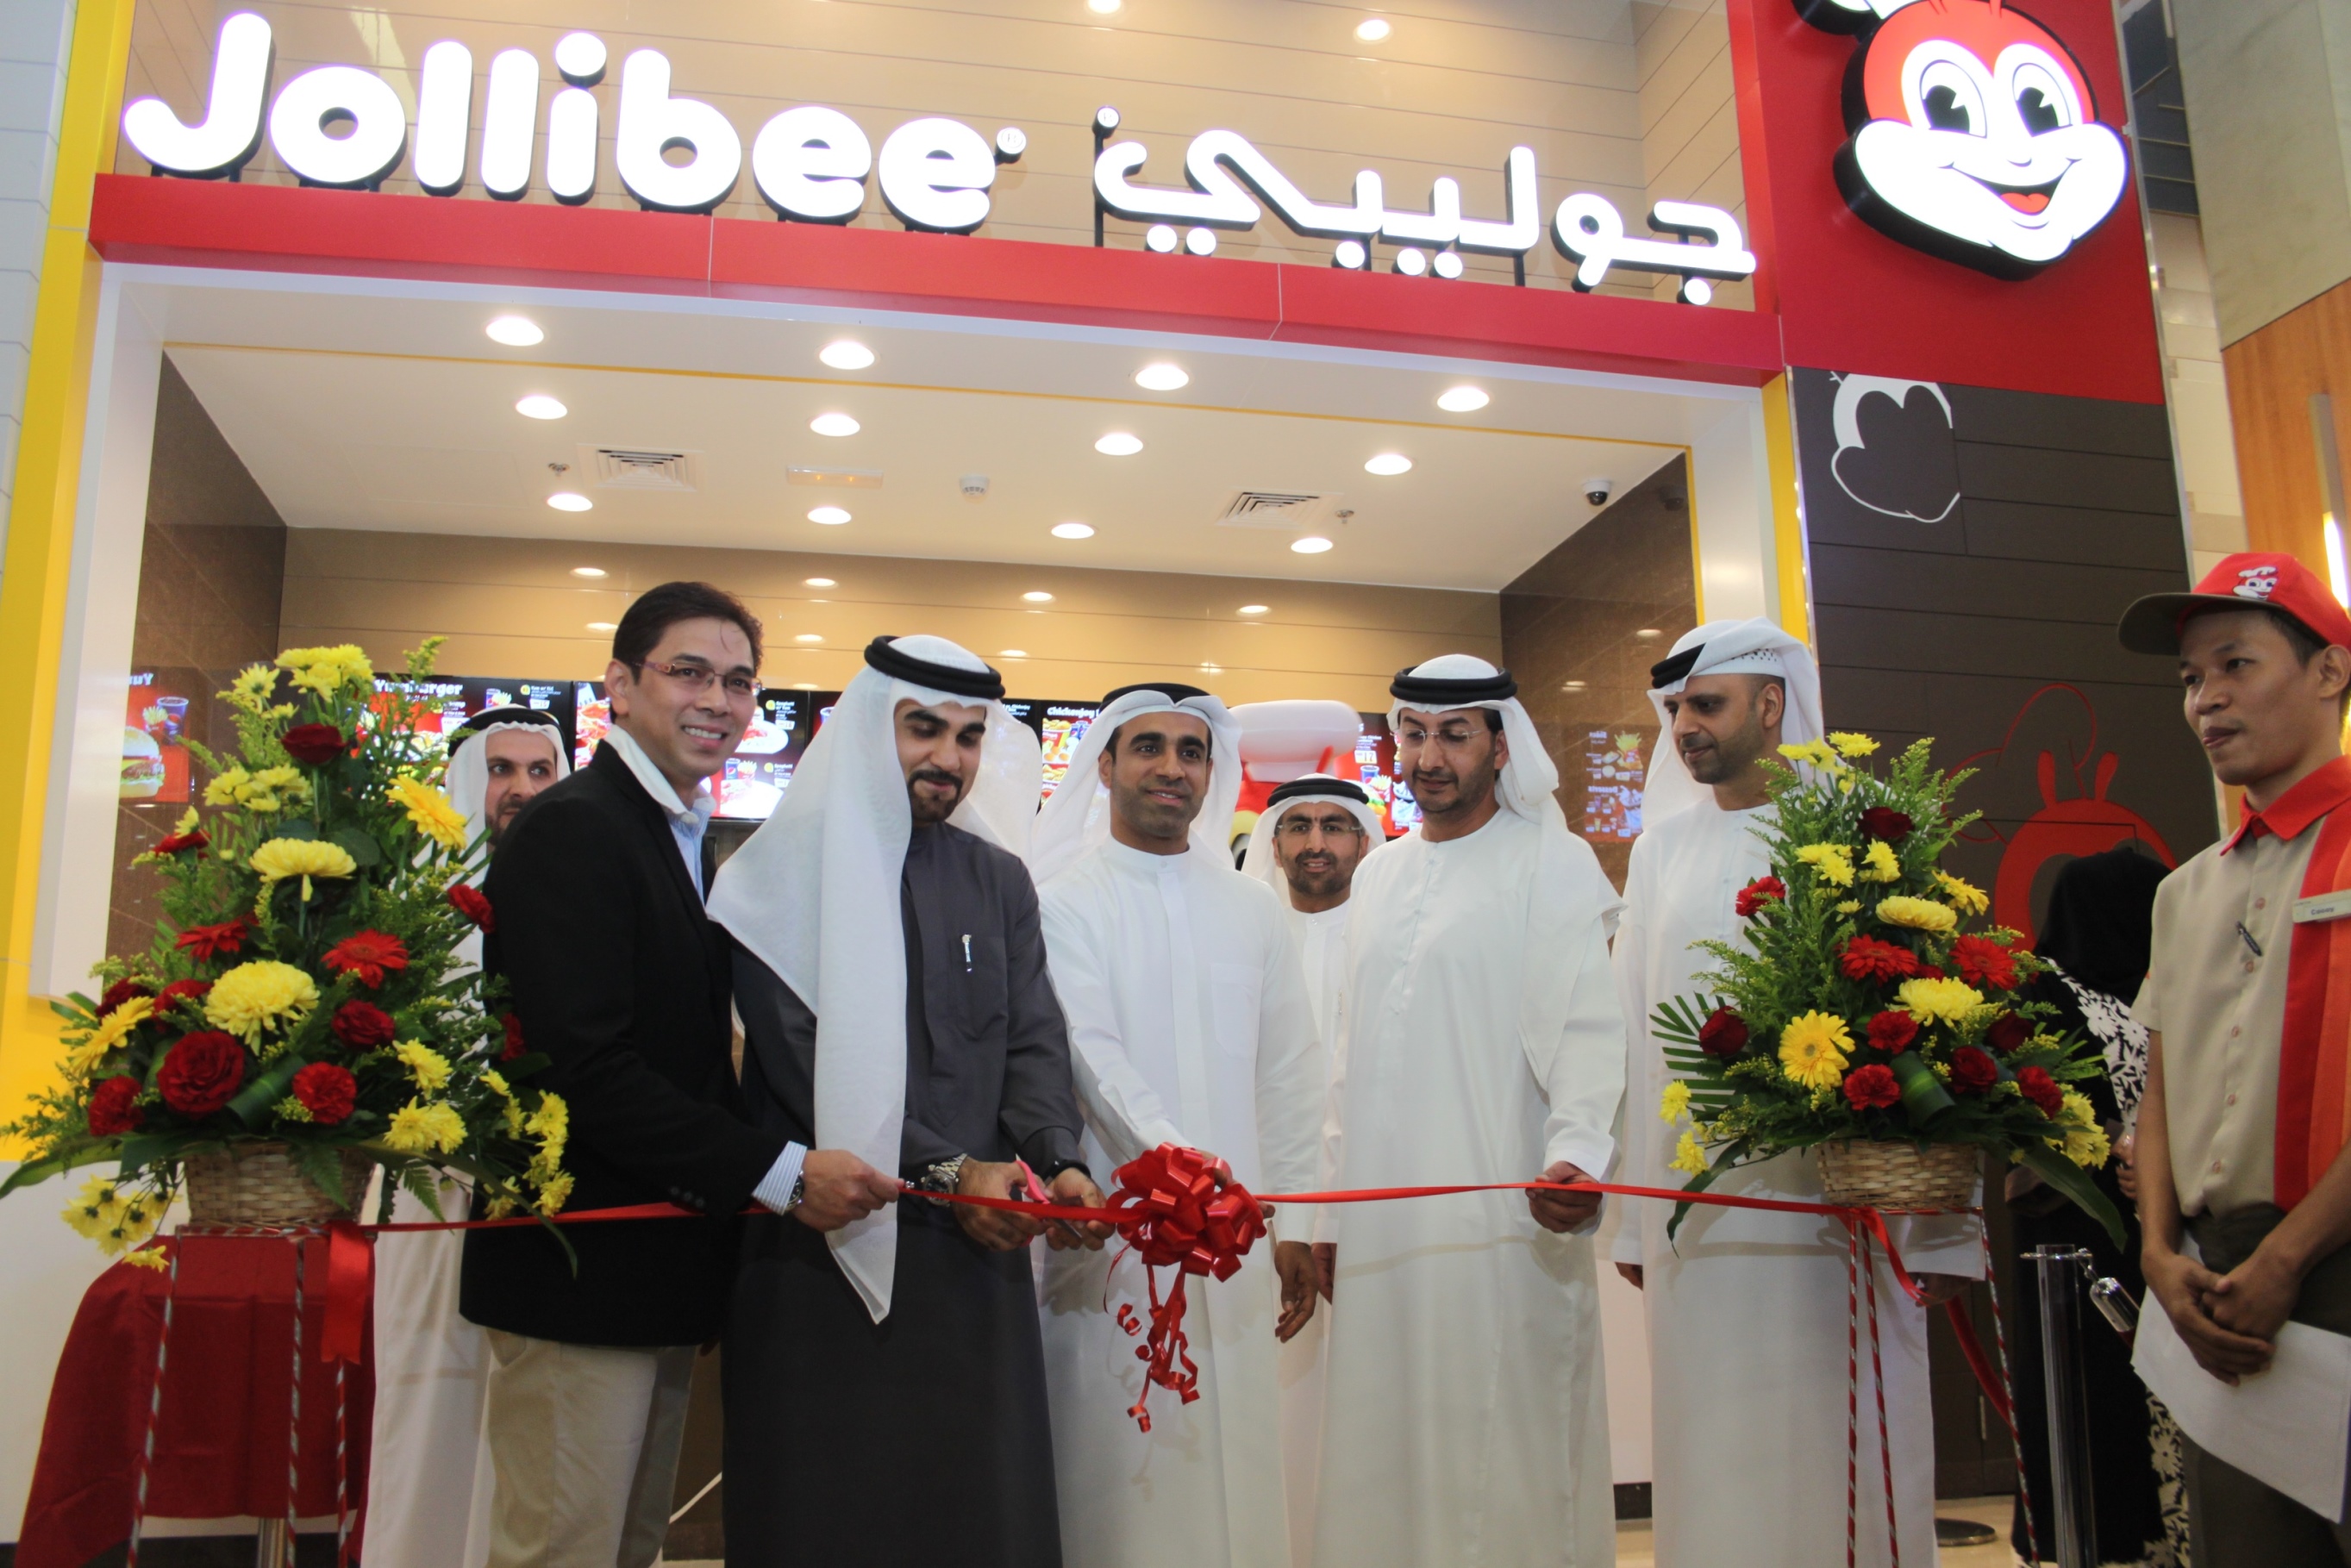 Jollibee UAE - Start your day right with Jollibee